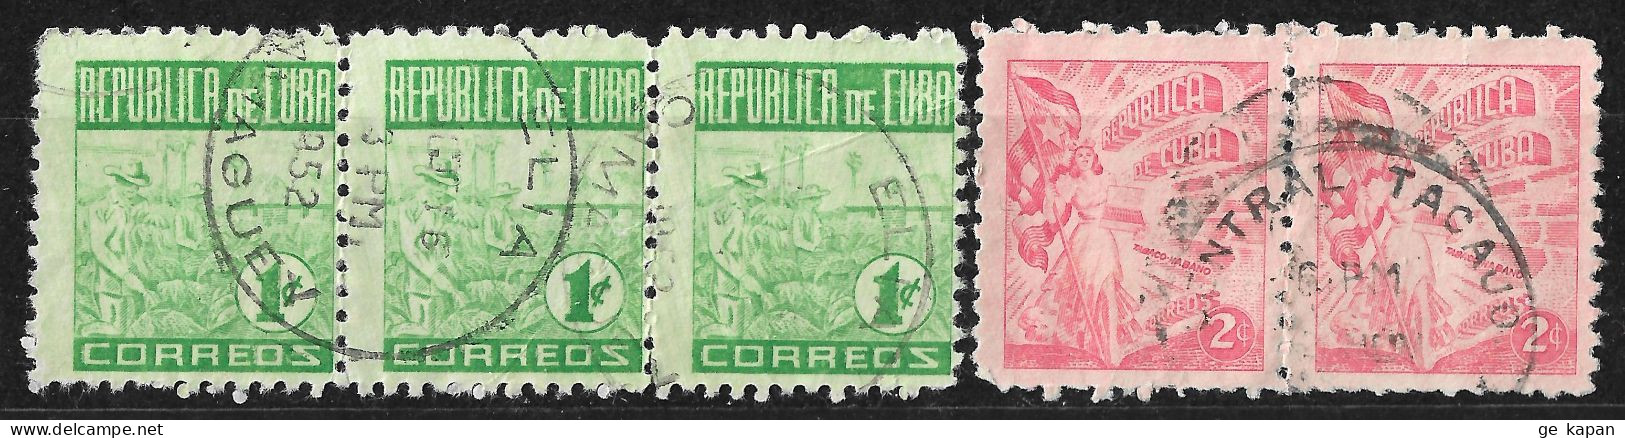 1950 CUBA Set Of Used Horizontal Strip And Pair (Michel # 229,230) CV €2.00 - Oblitérés